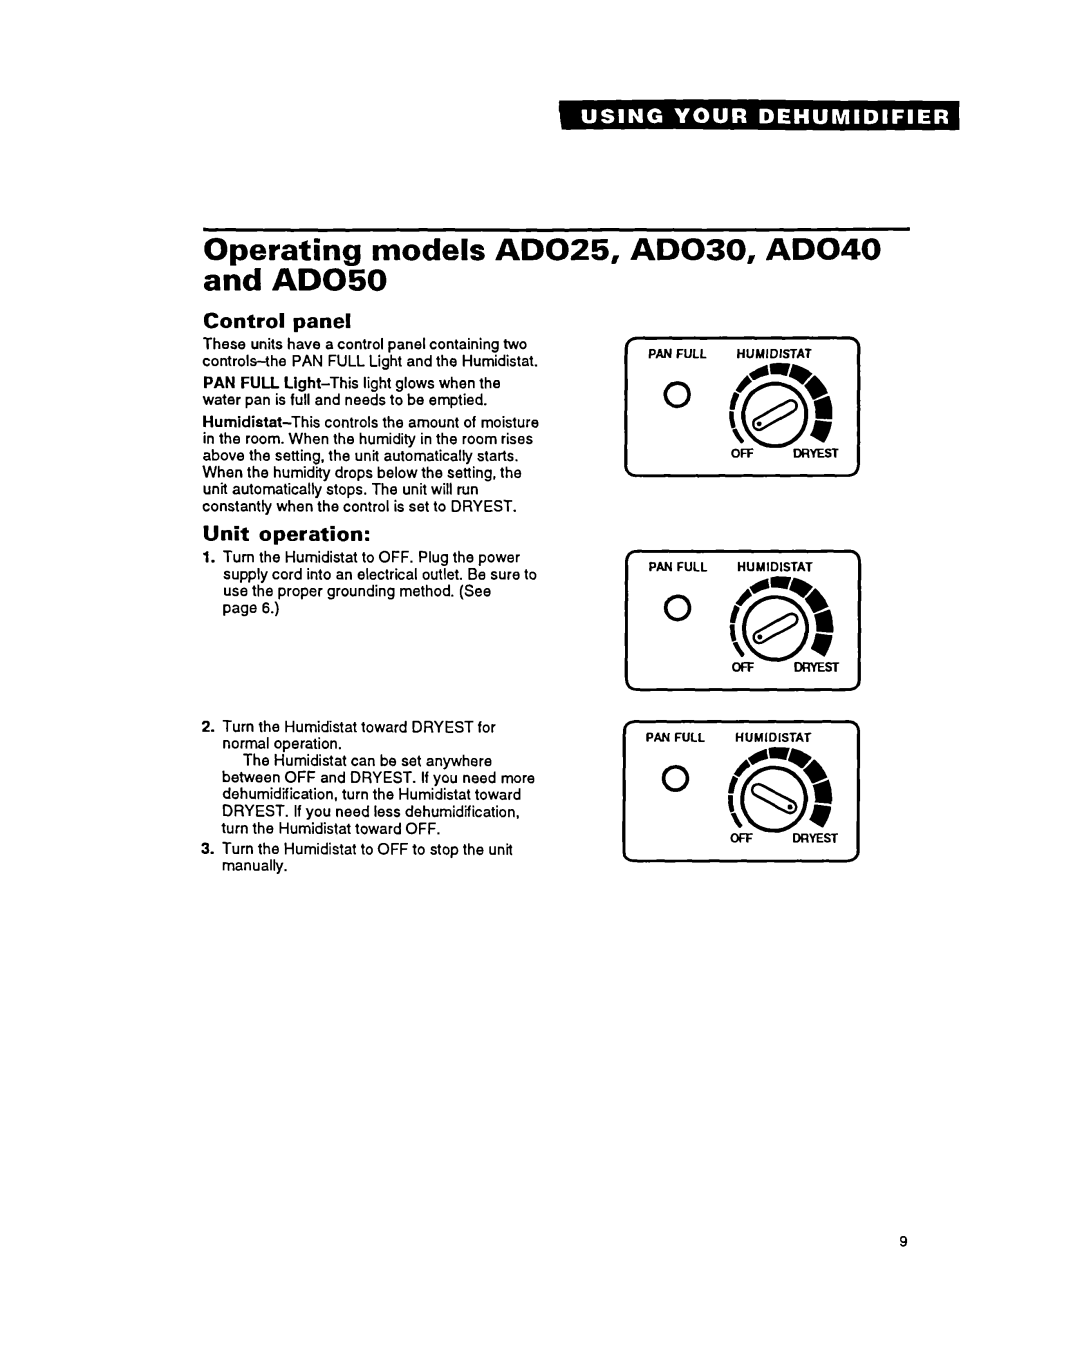 Whirlpool ADO40, ADO15 warranty Operating models AD025, and ADO%0, AD030, AD040, Control panel, Unit operation 